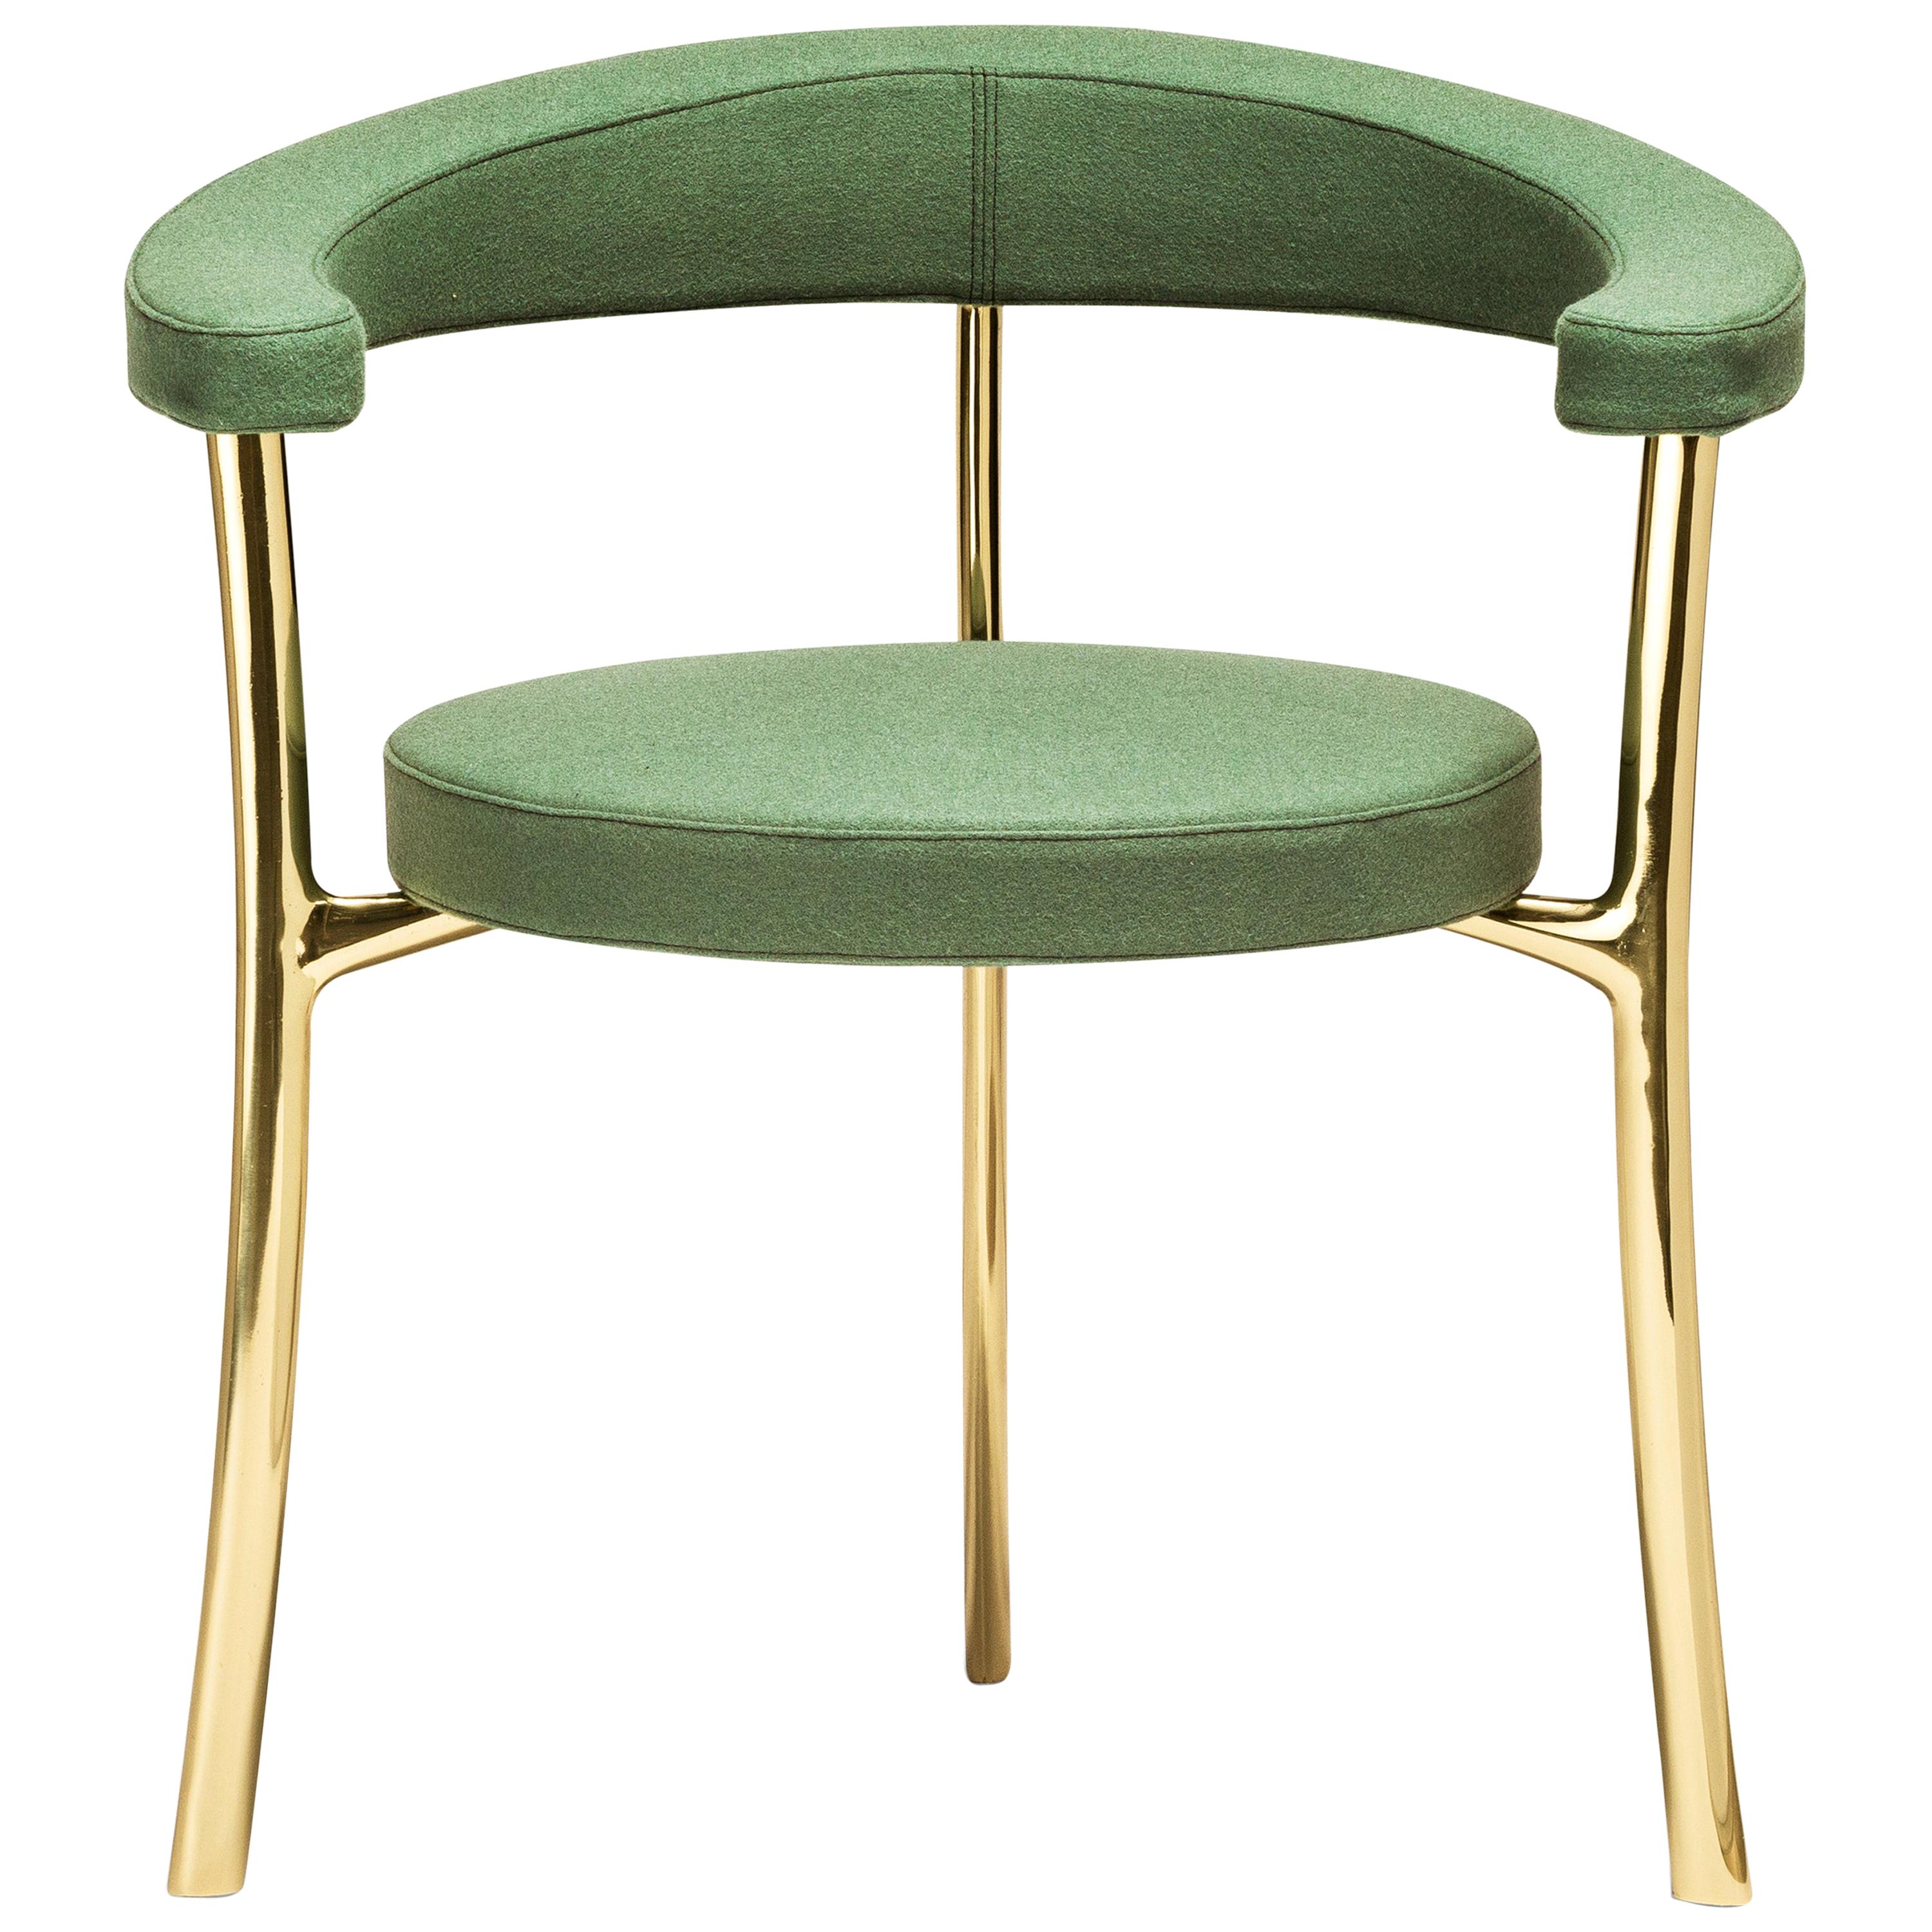 Katana-Sessel aus grünem Stoff mit poliertem Messing von Paolo Rizzatto